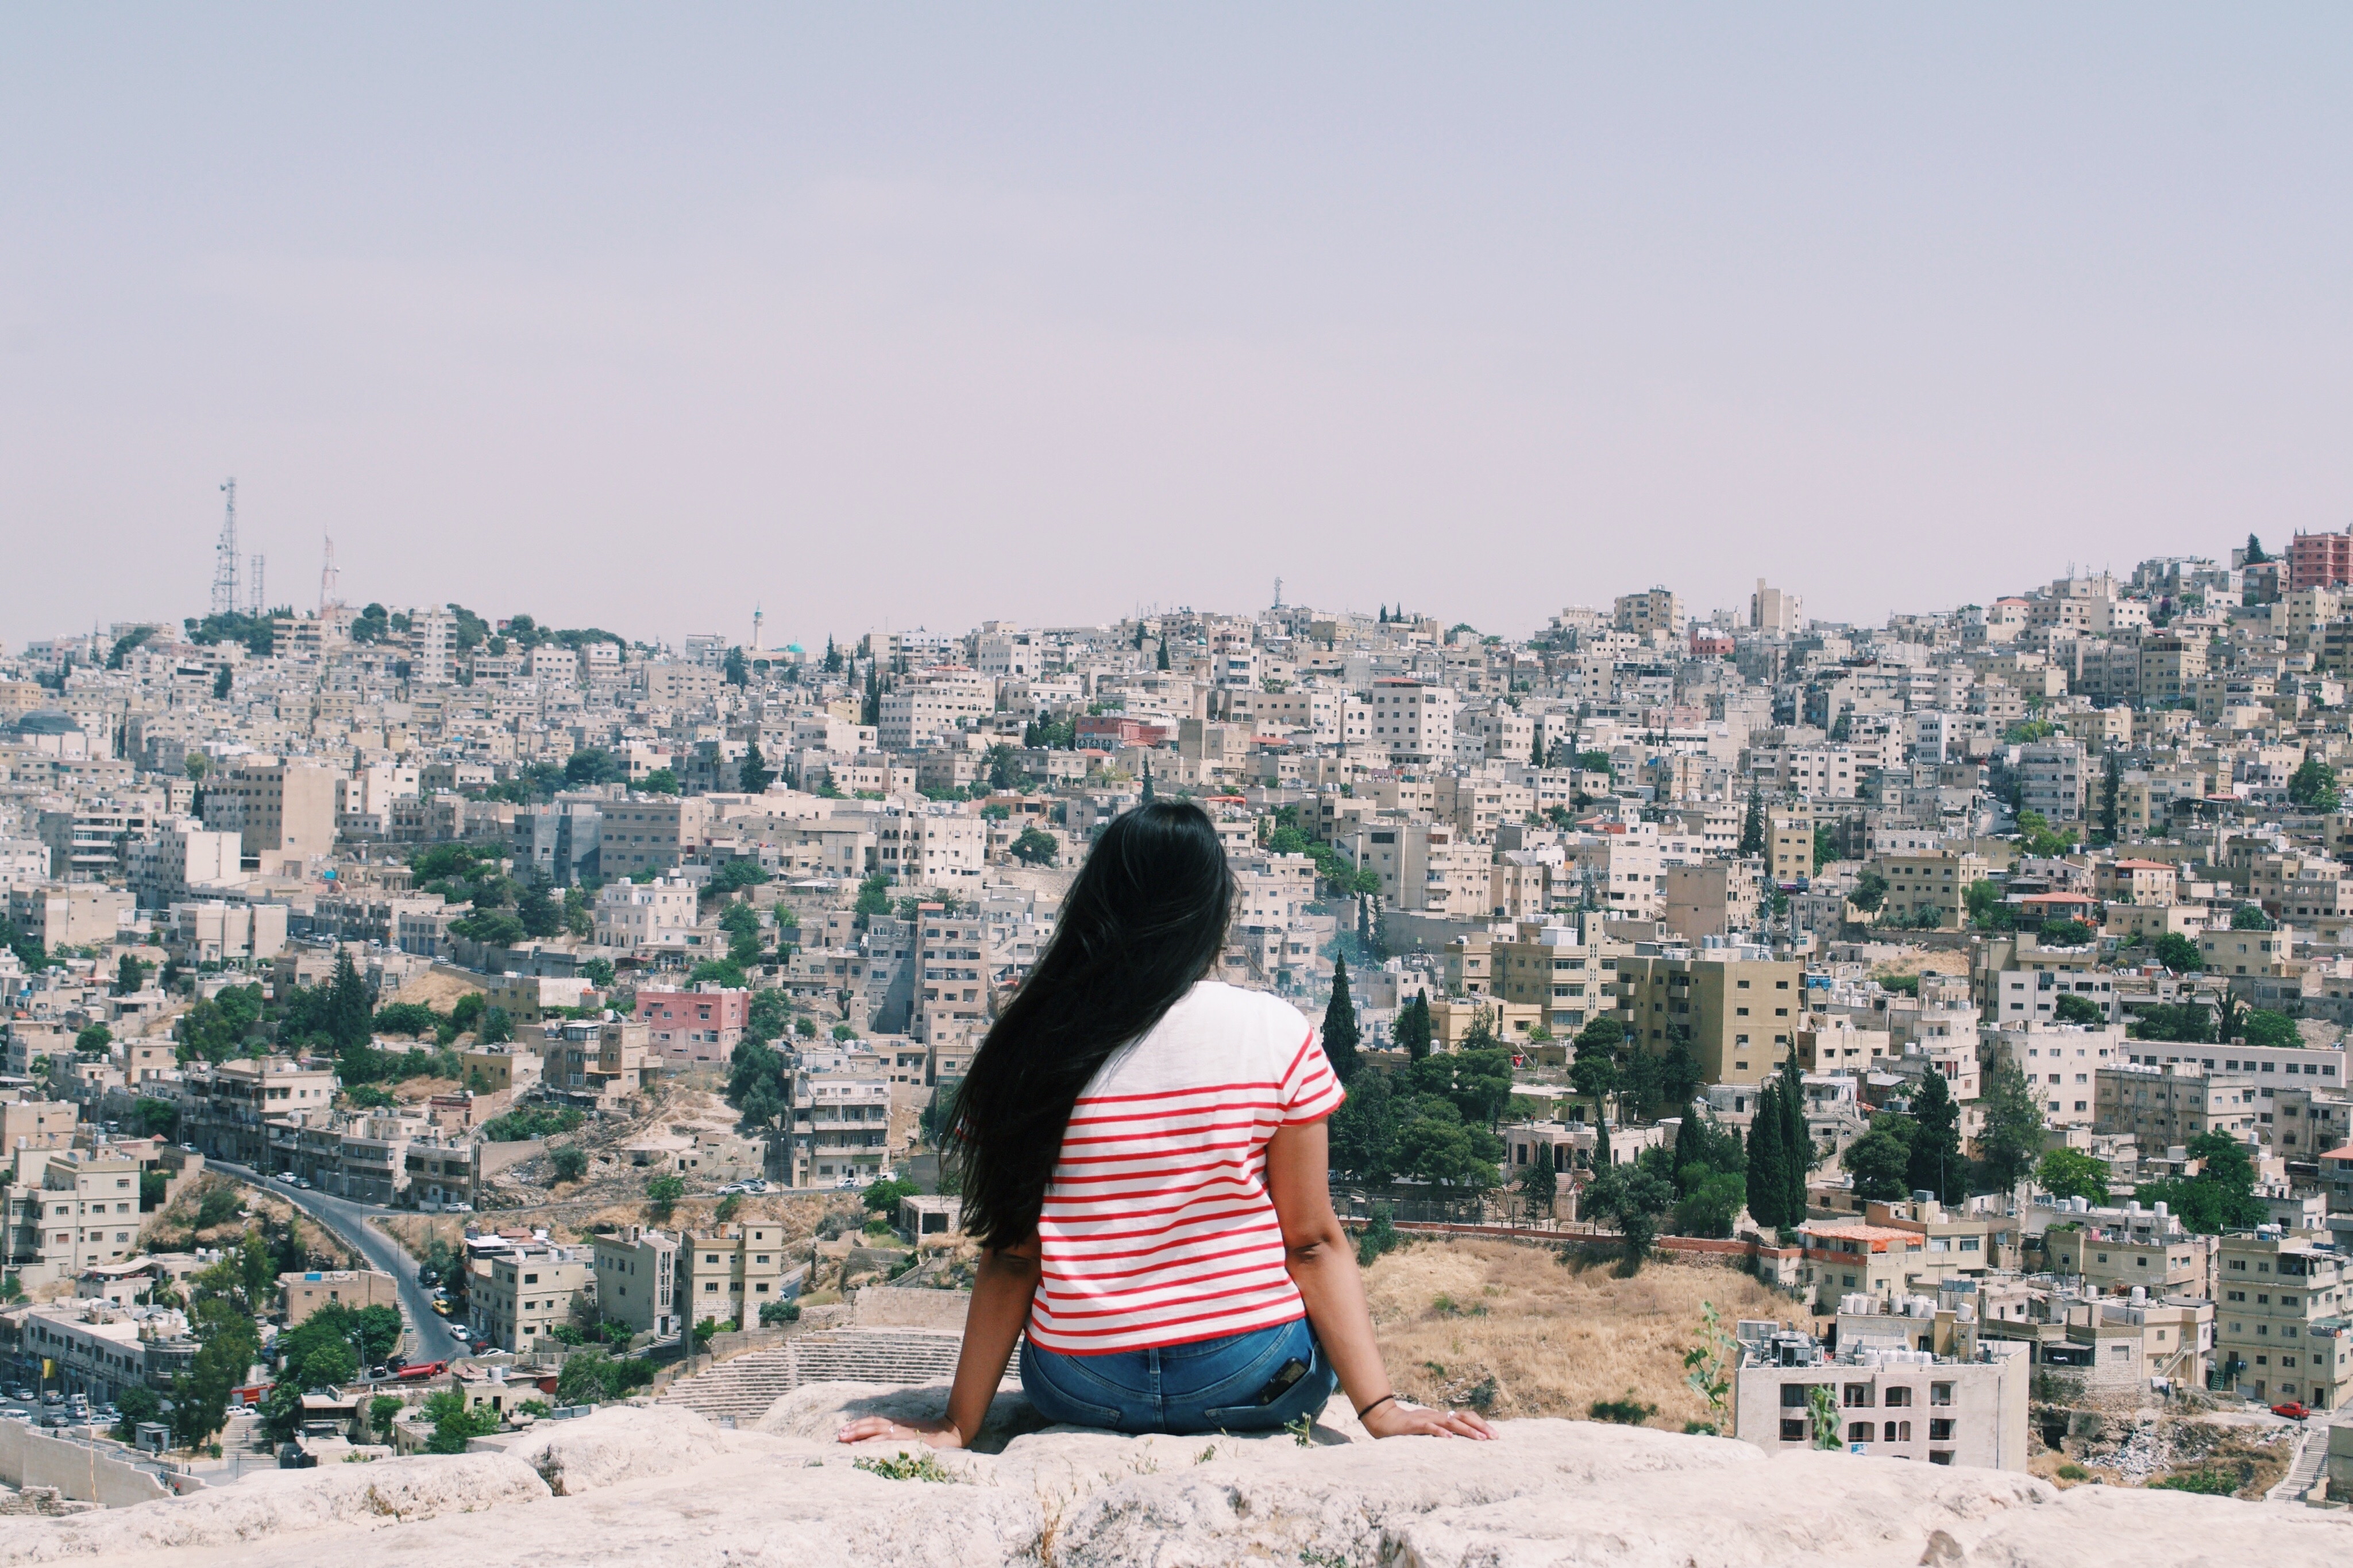 Overlooking the city of Amman